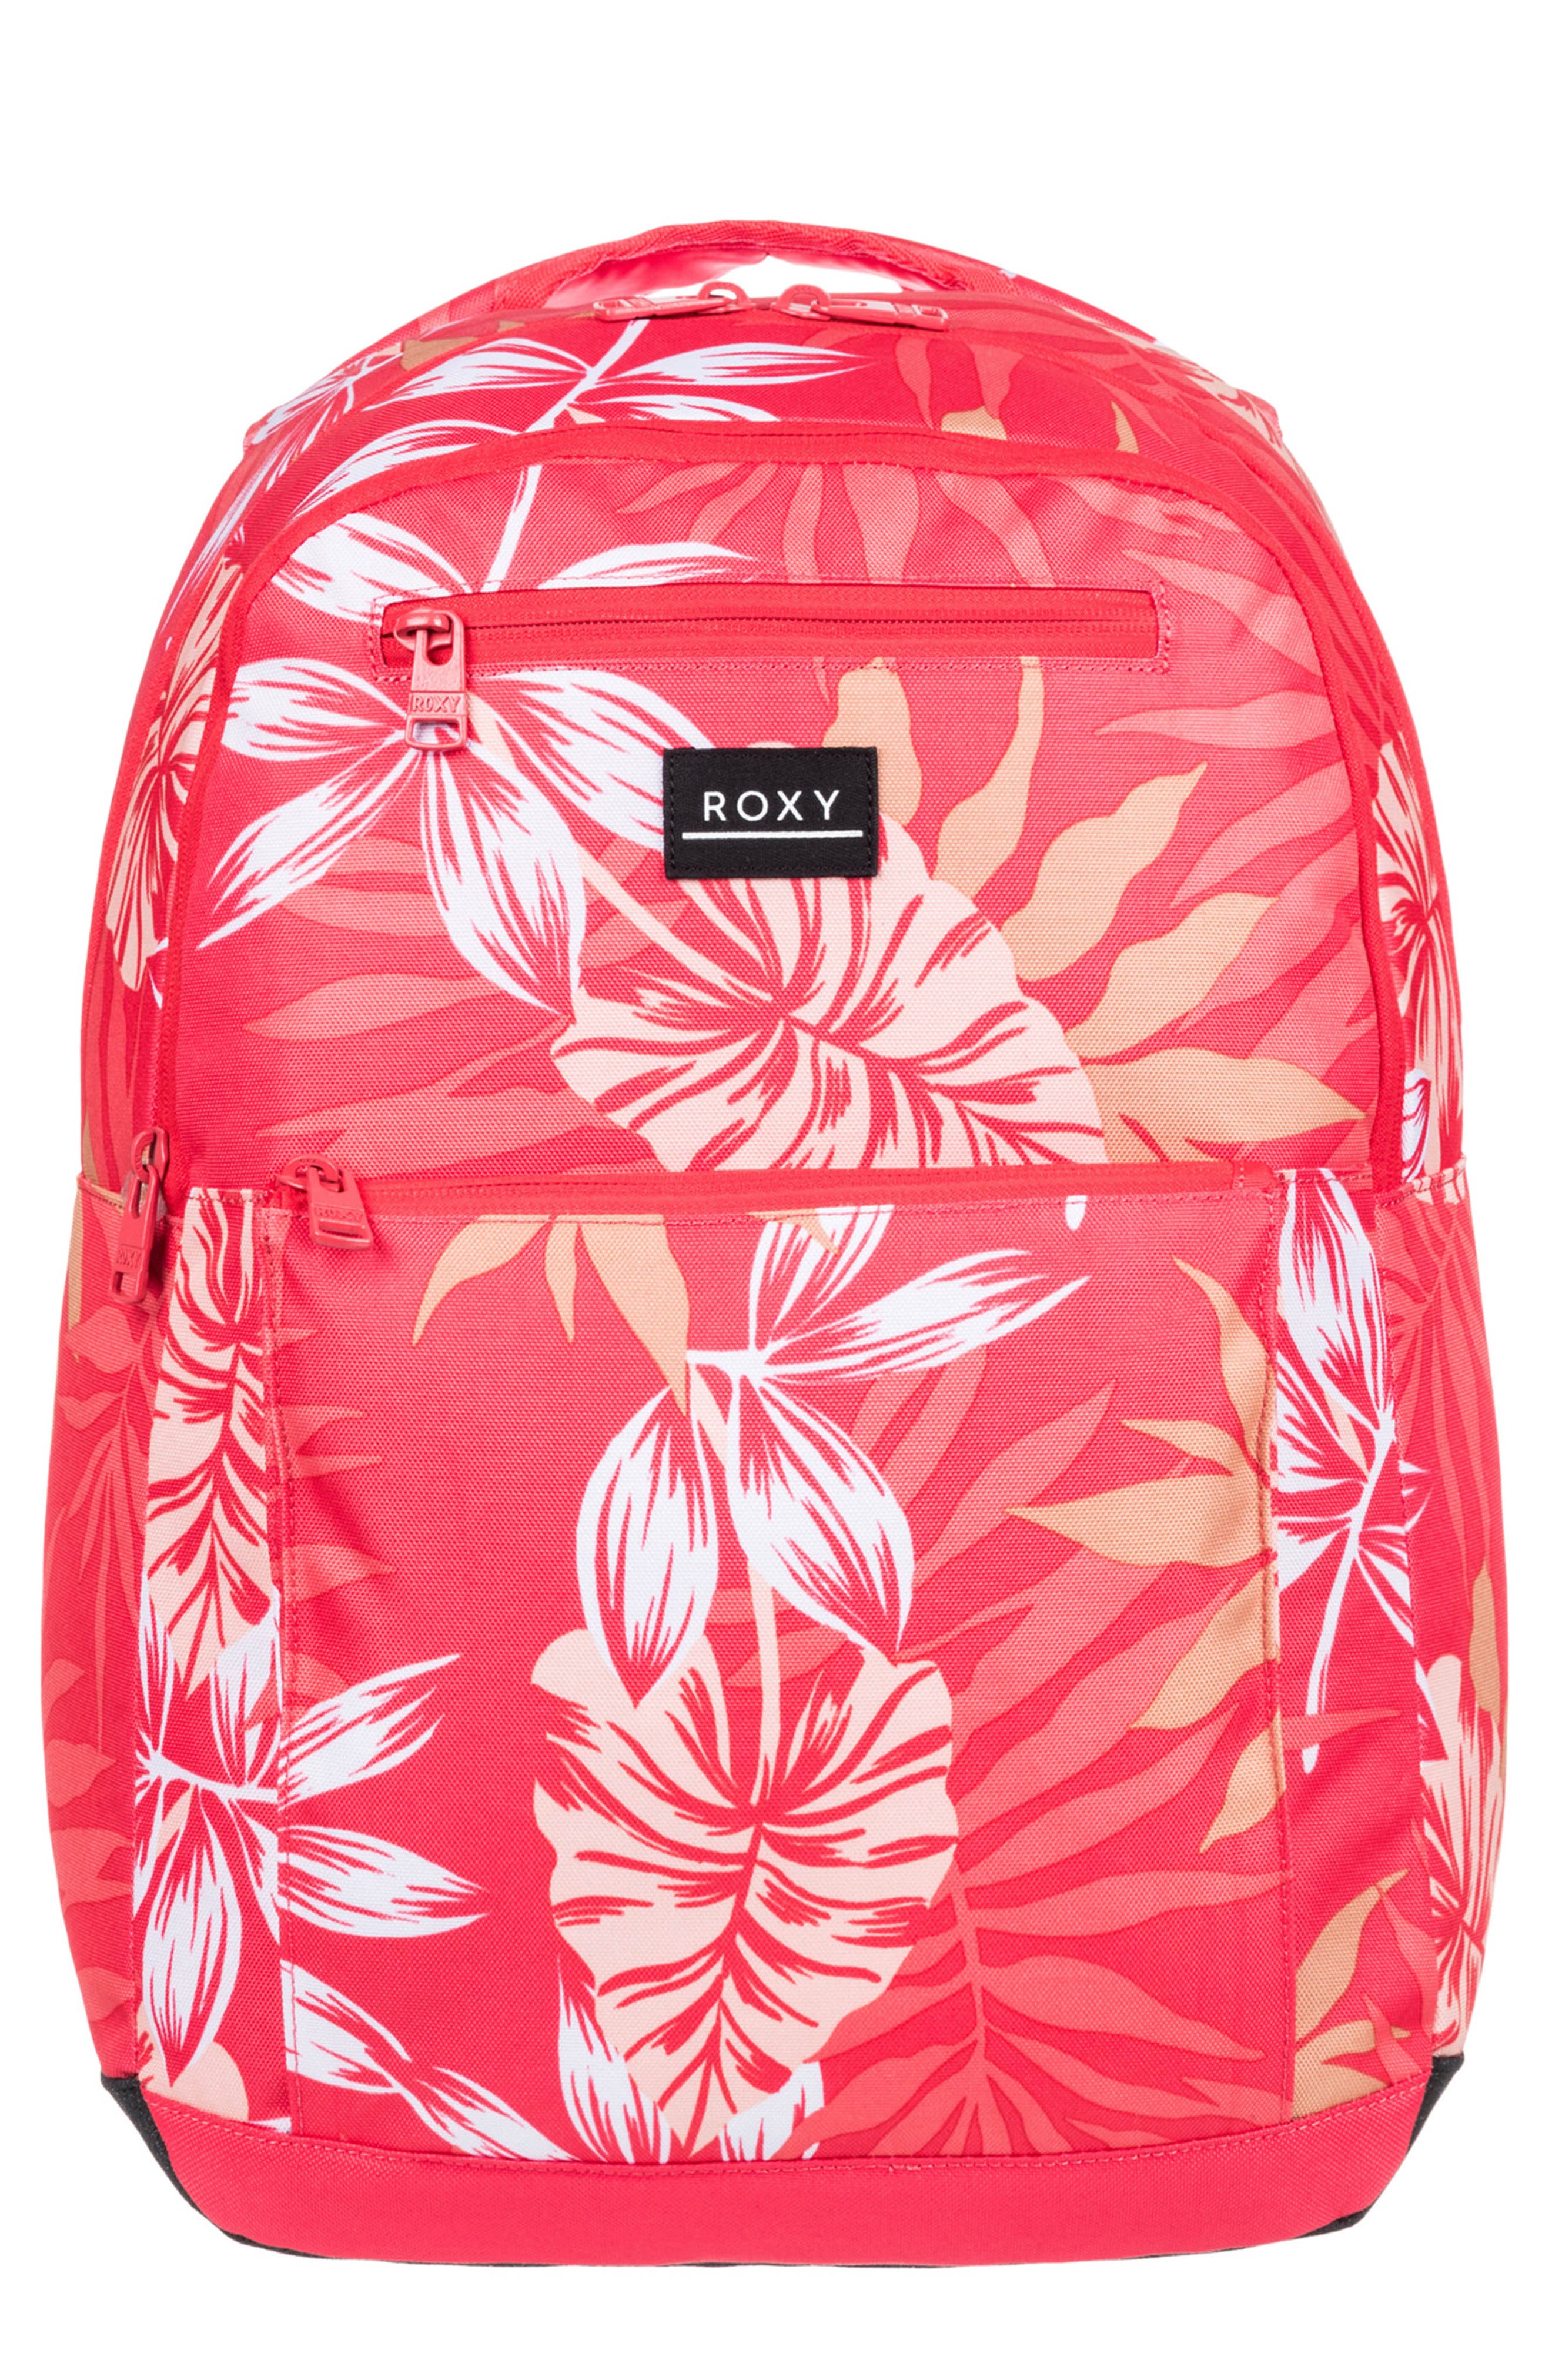 NEW *Roxy Shadow Swell* Women/Girls Backpack Rucksack School College Uni Bag! 